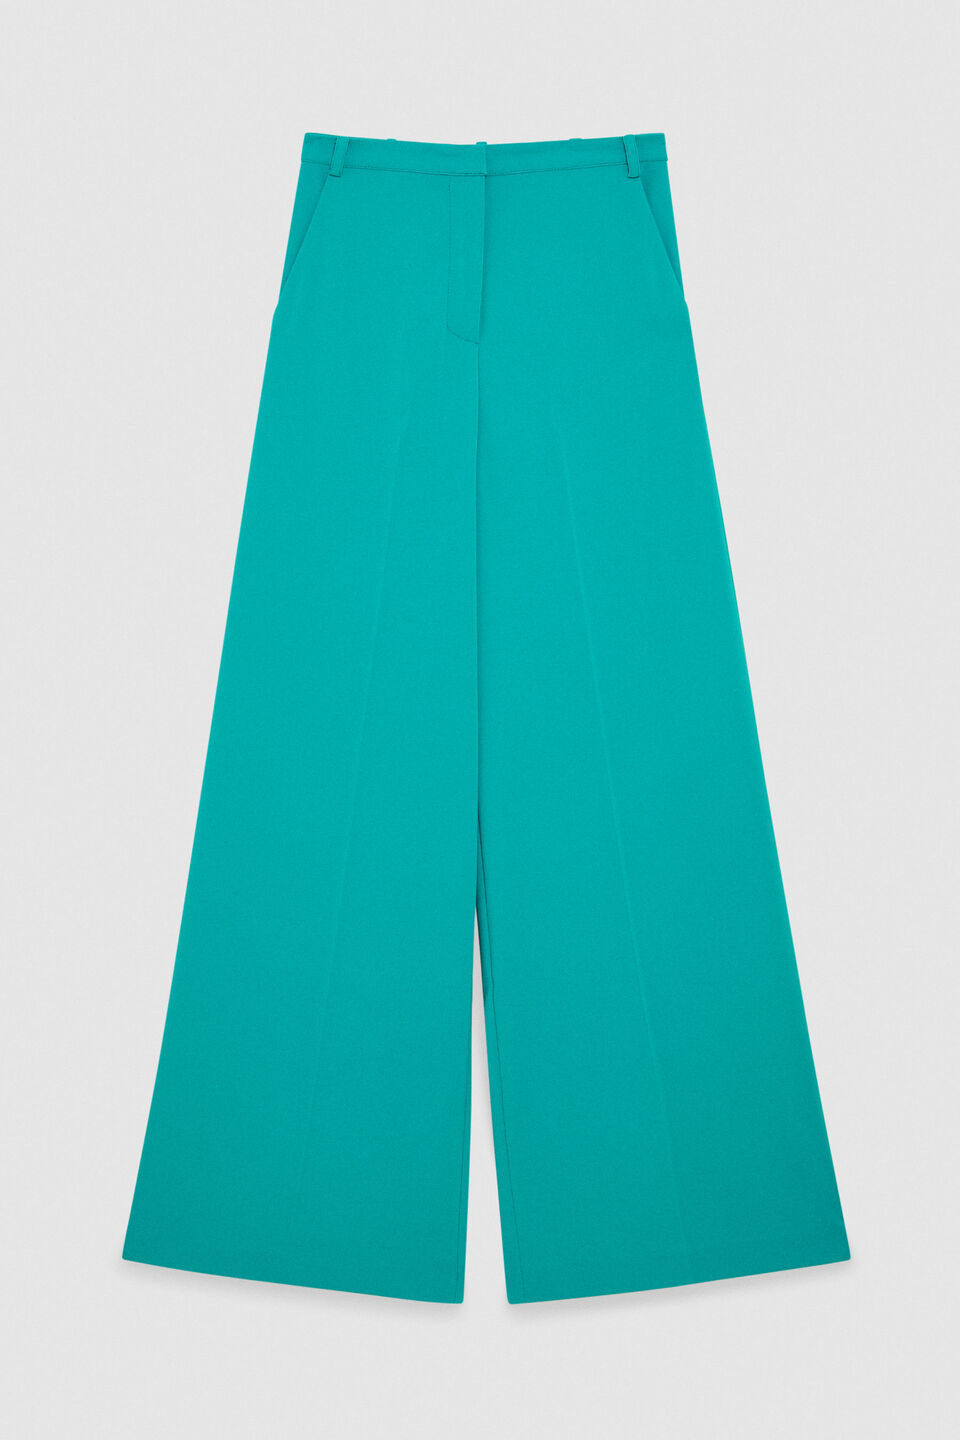 Patrizia Pepe Crepe Suit Trousers  - Illusion Green